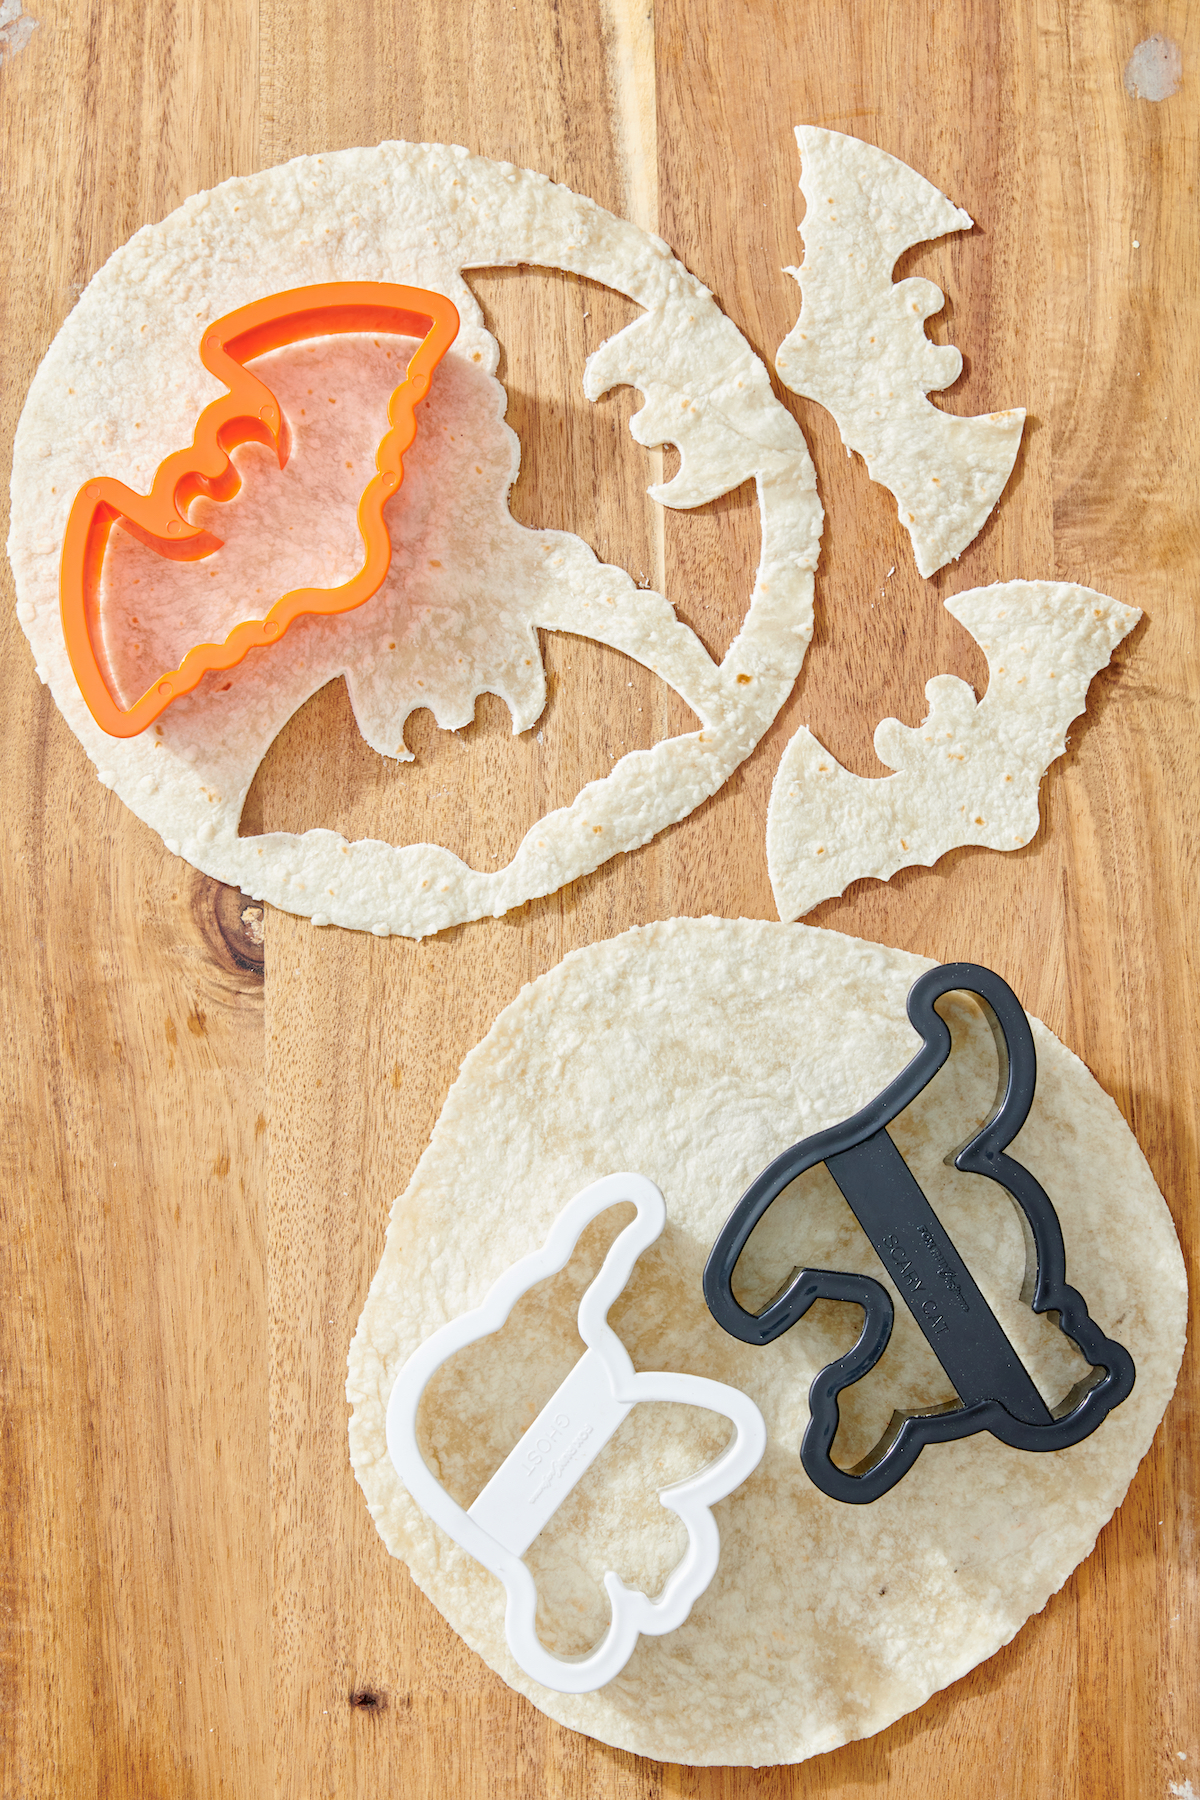 Bat cookie cutter cutting out bat shapes from tortilla.